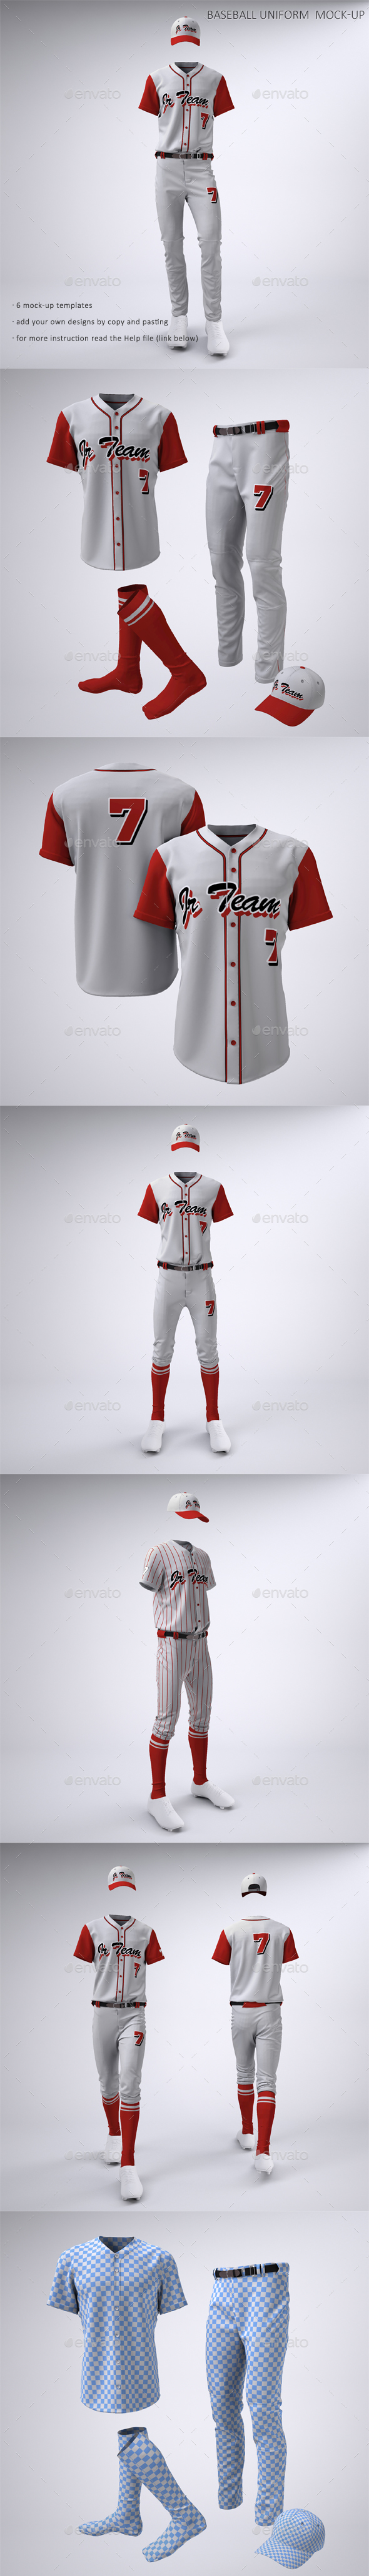 Baseball Uniform Mockup - Free Vectors & PSDs to Download